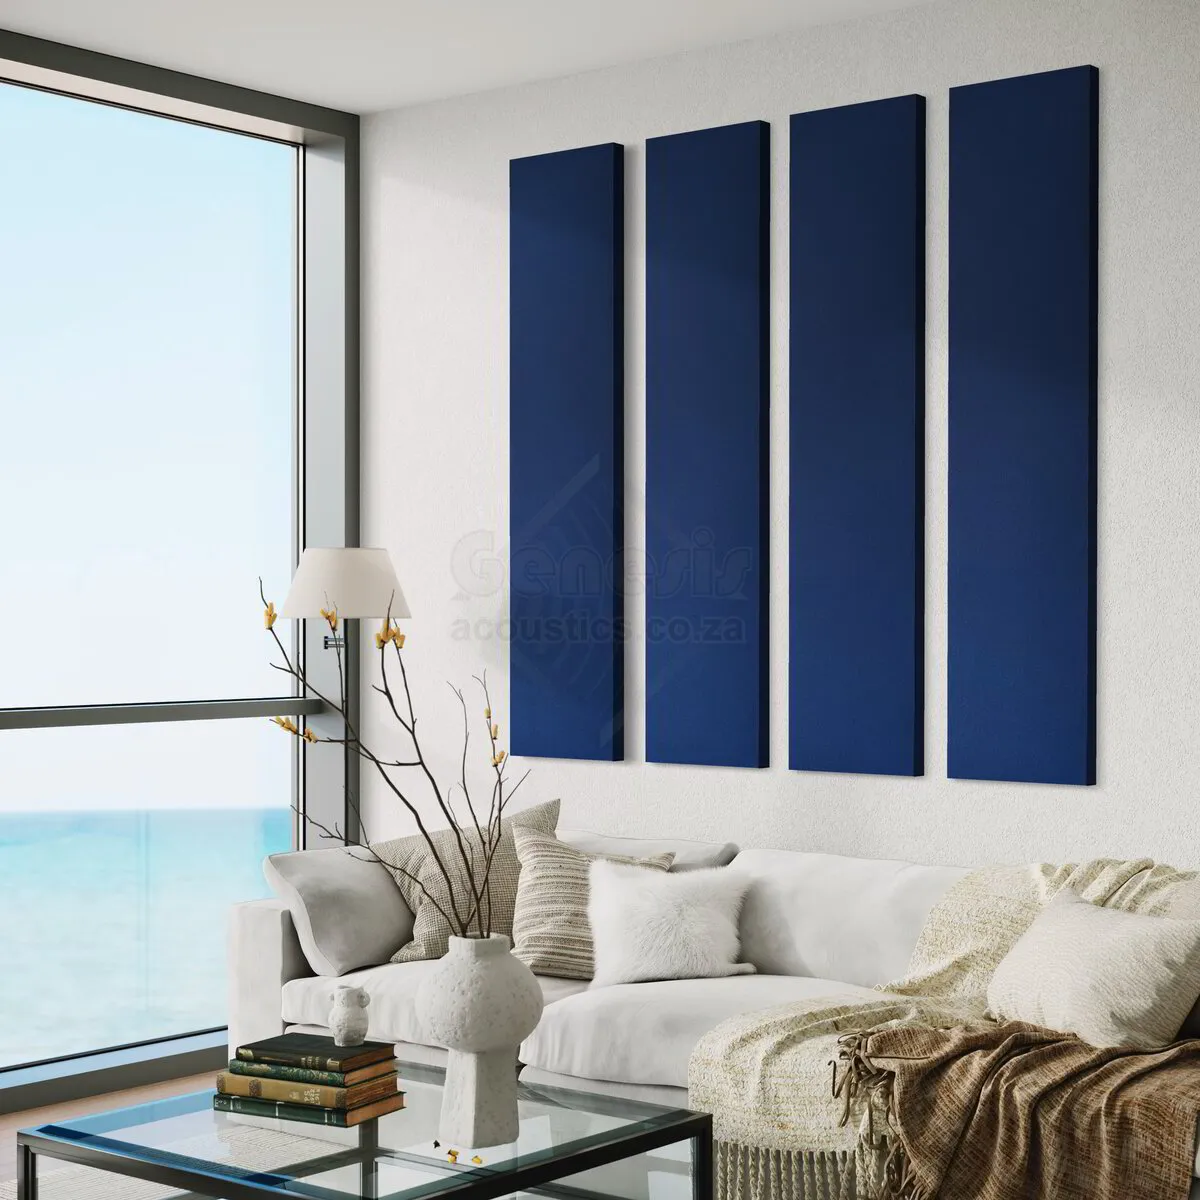 S5 Pro Acoustic Wall Panels - 180cm x 40cm Set of 4 - Bahama